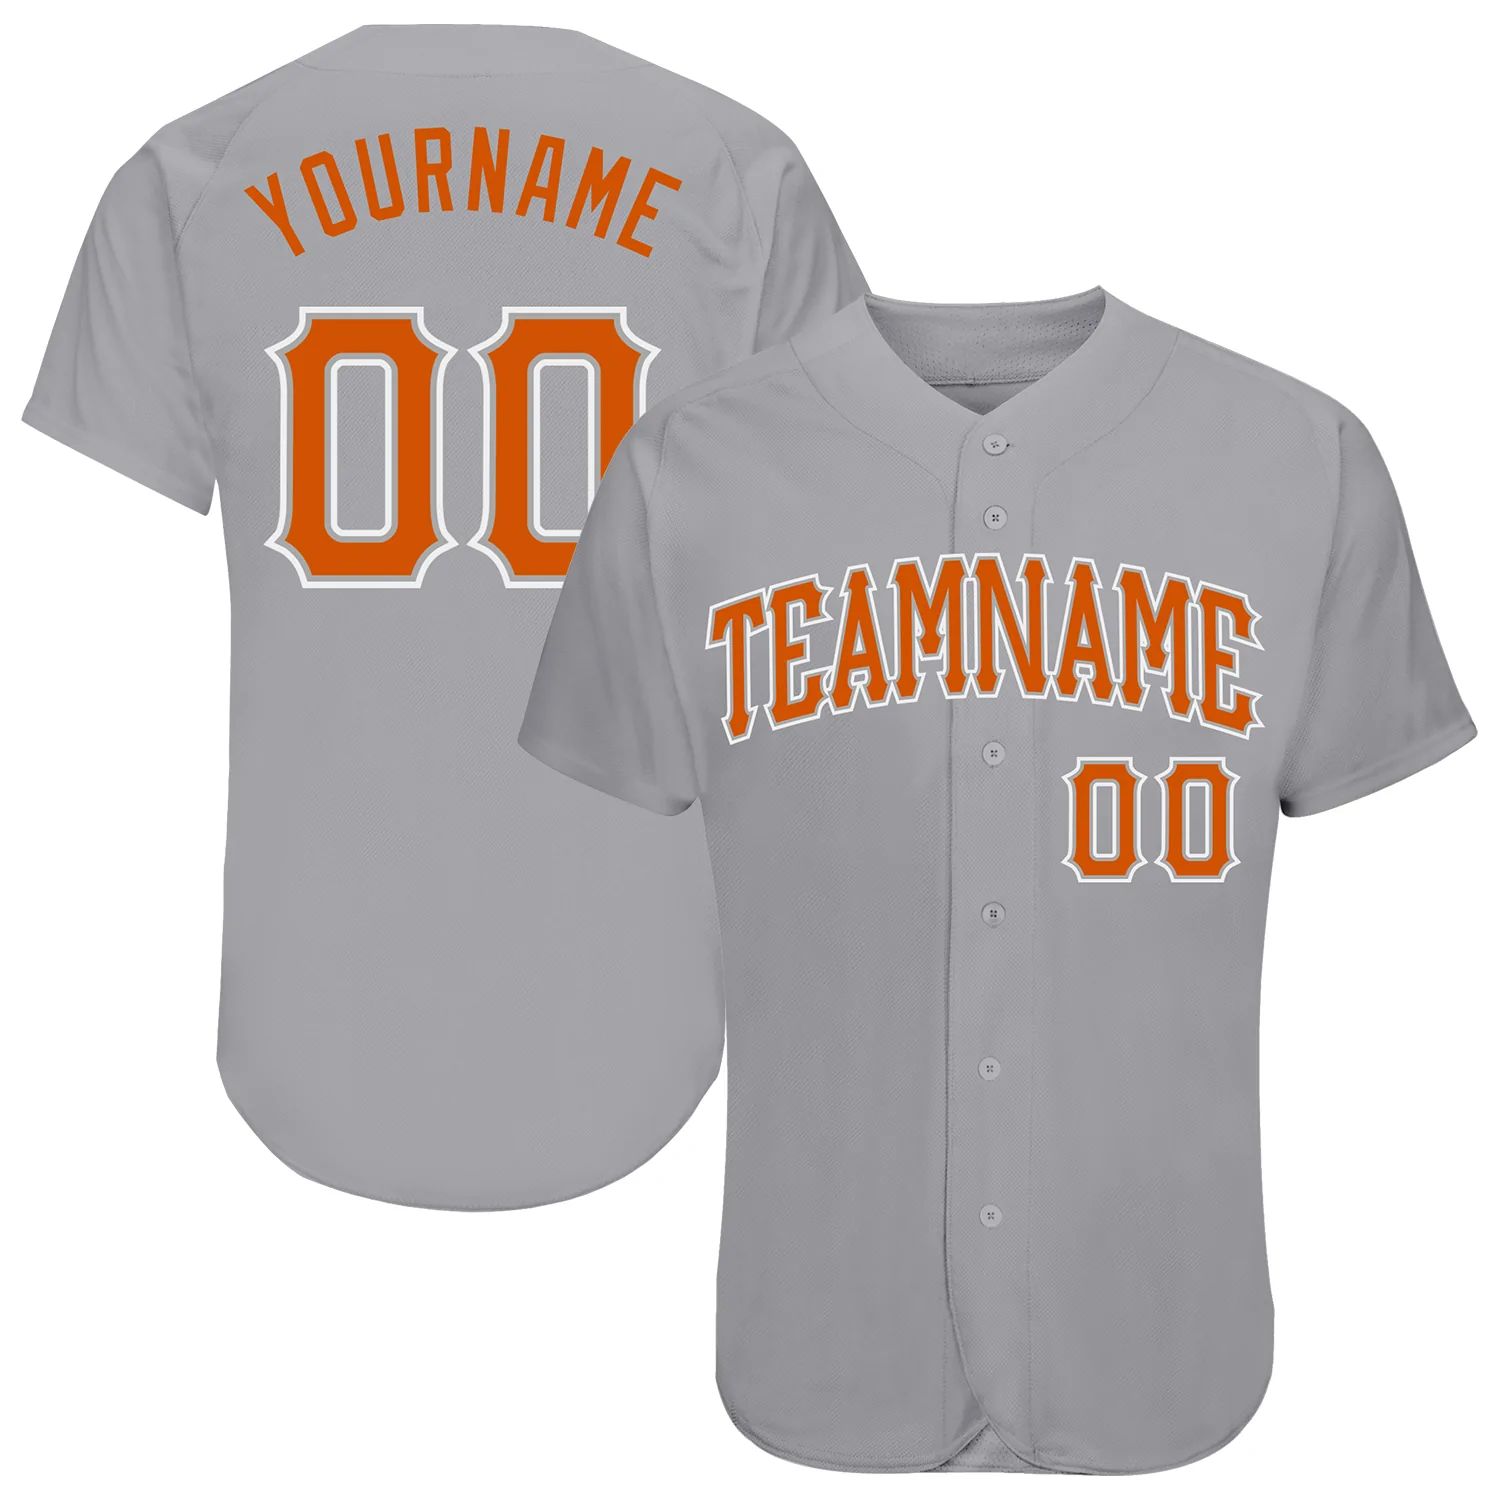 build-white-gray-baseball-texas-orange-jersey-authentic-gray0166-online-1.jpg